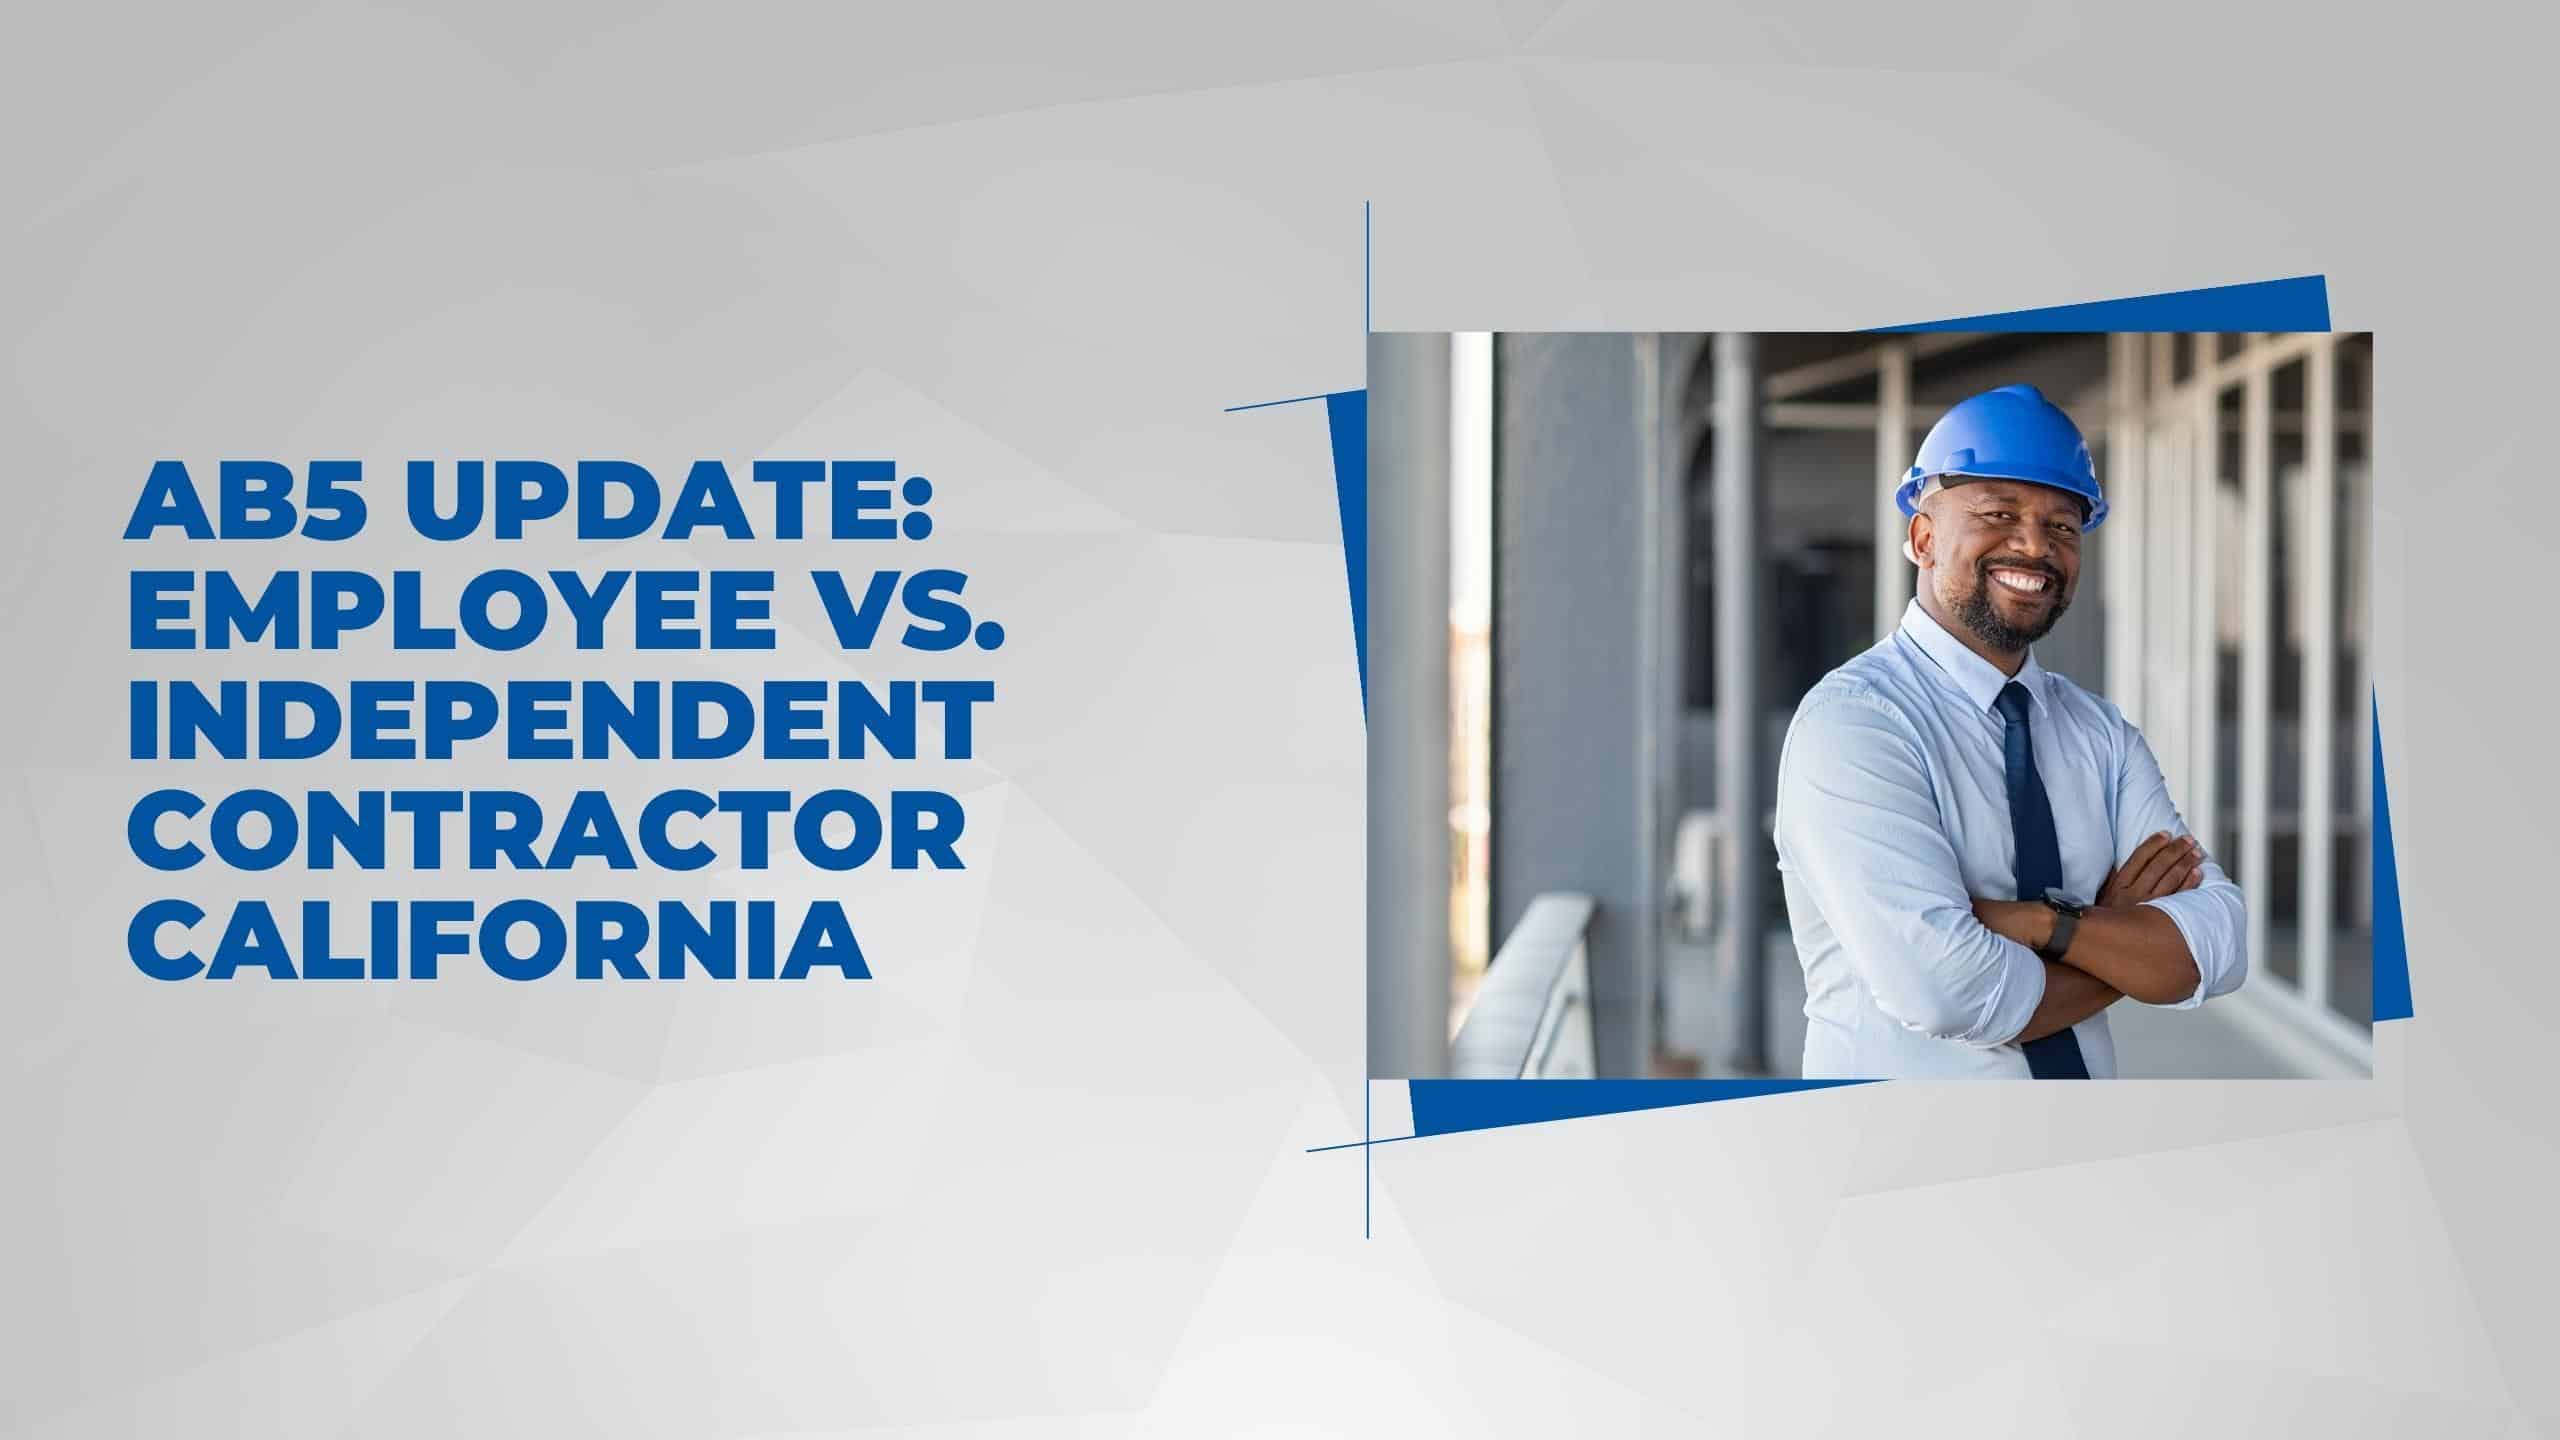 AB5 Update: Employee vs. Independent Contractor California